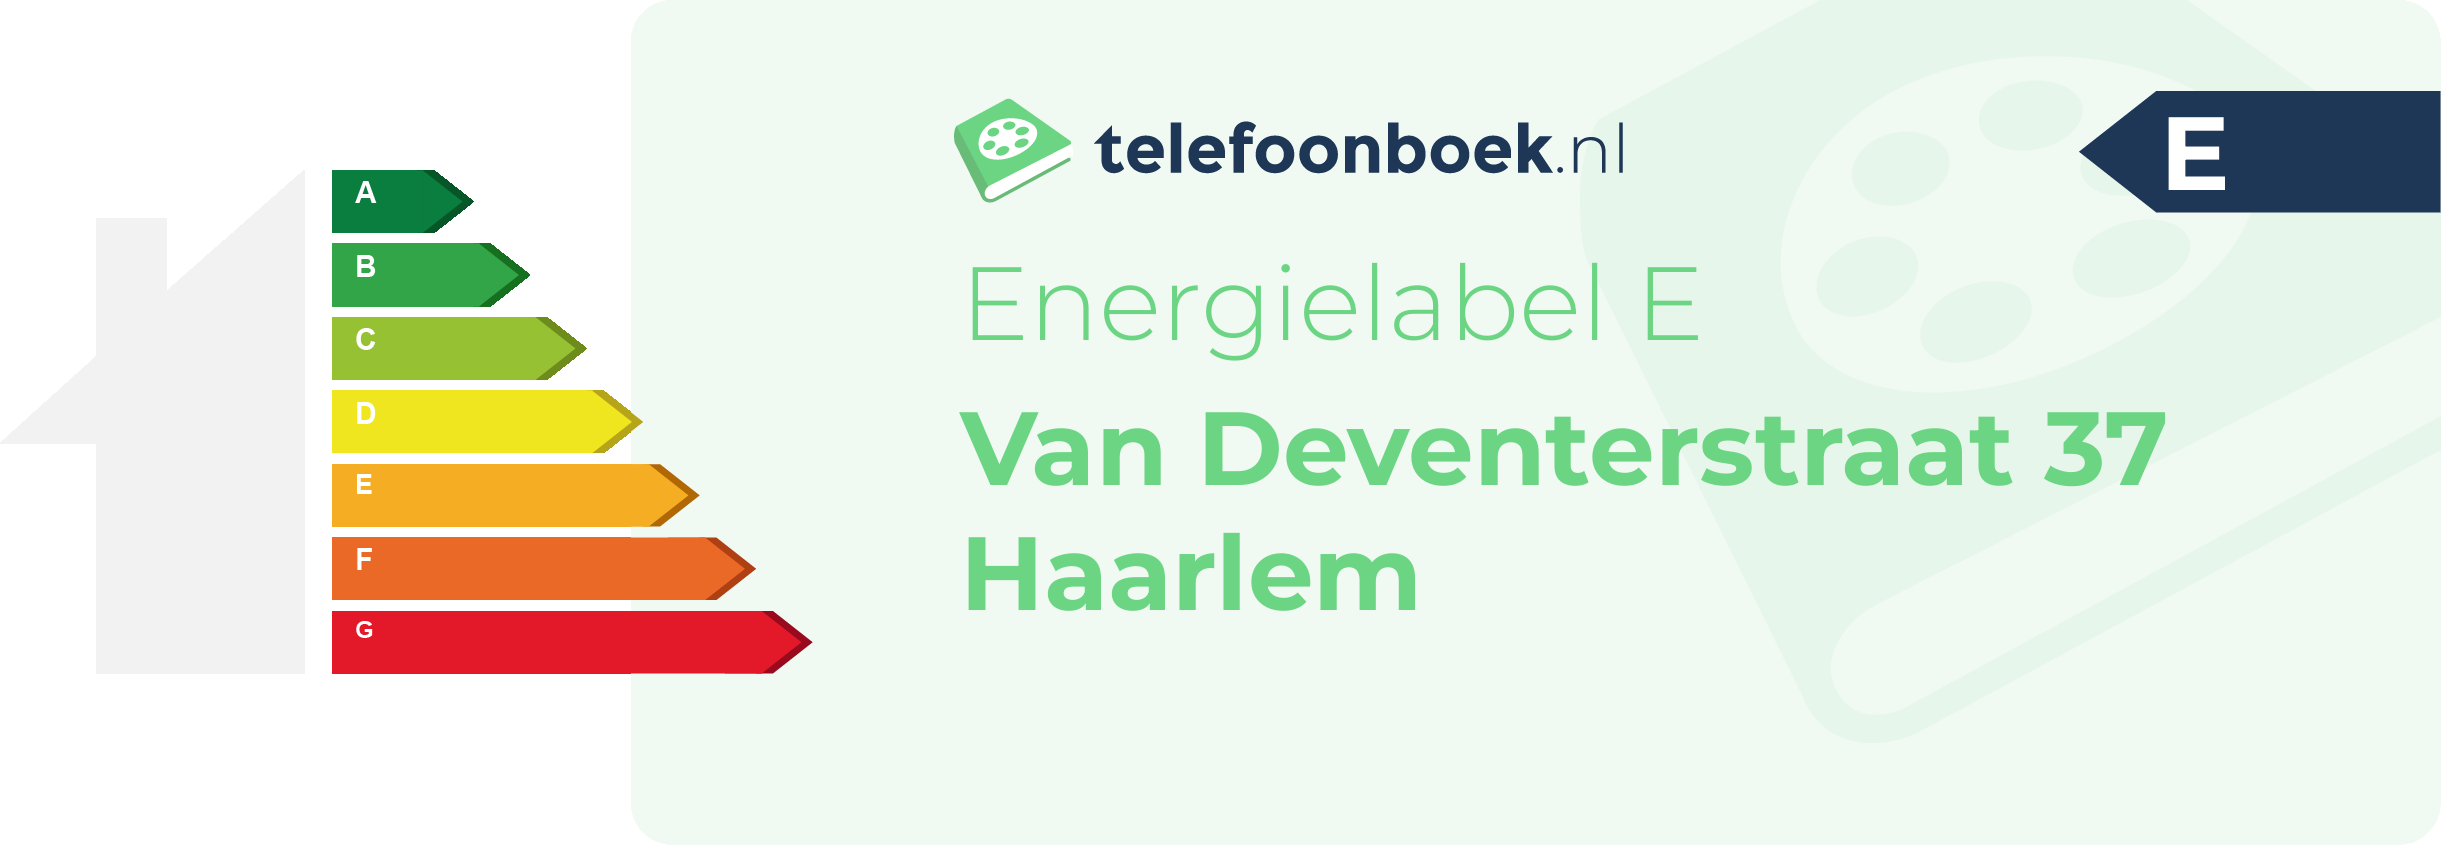 Energielabel Van Deventerstraat 37 Haarlem